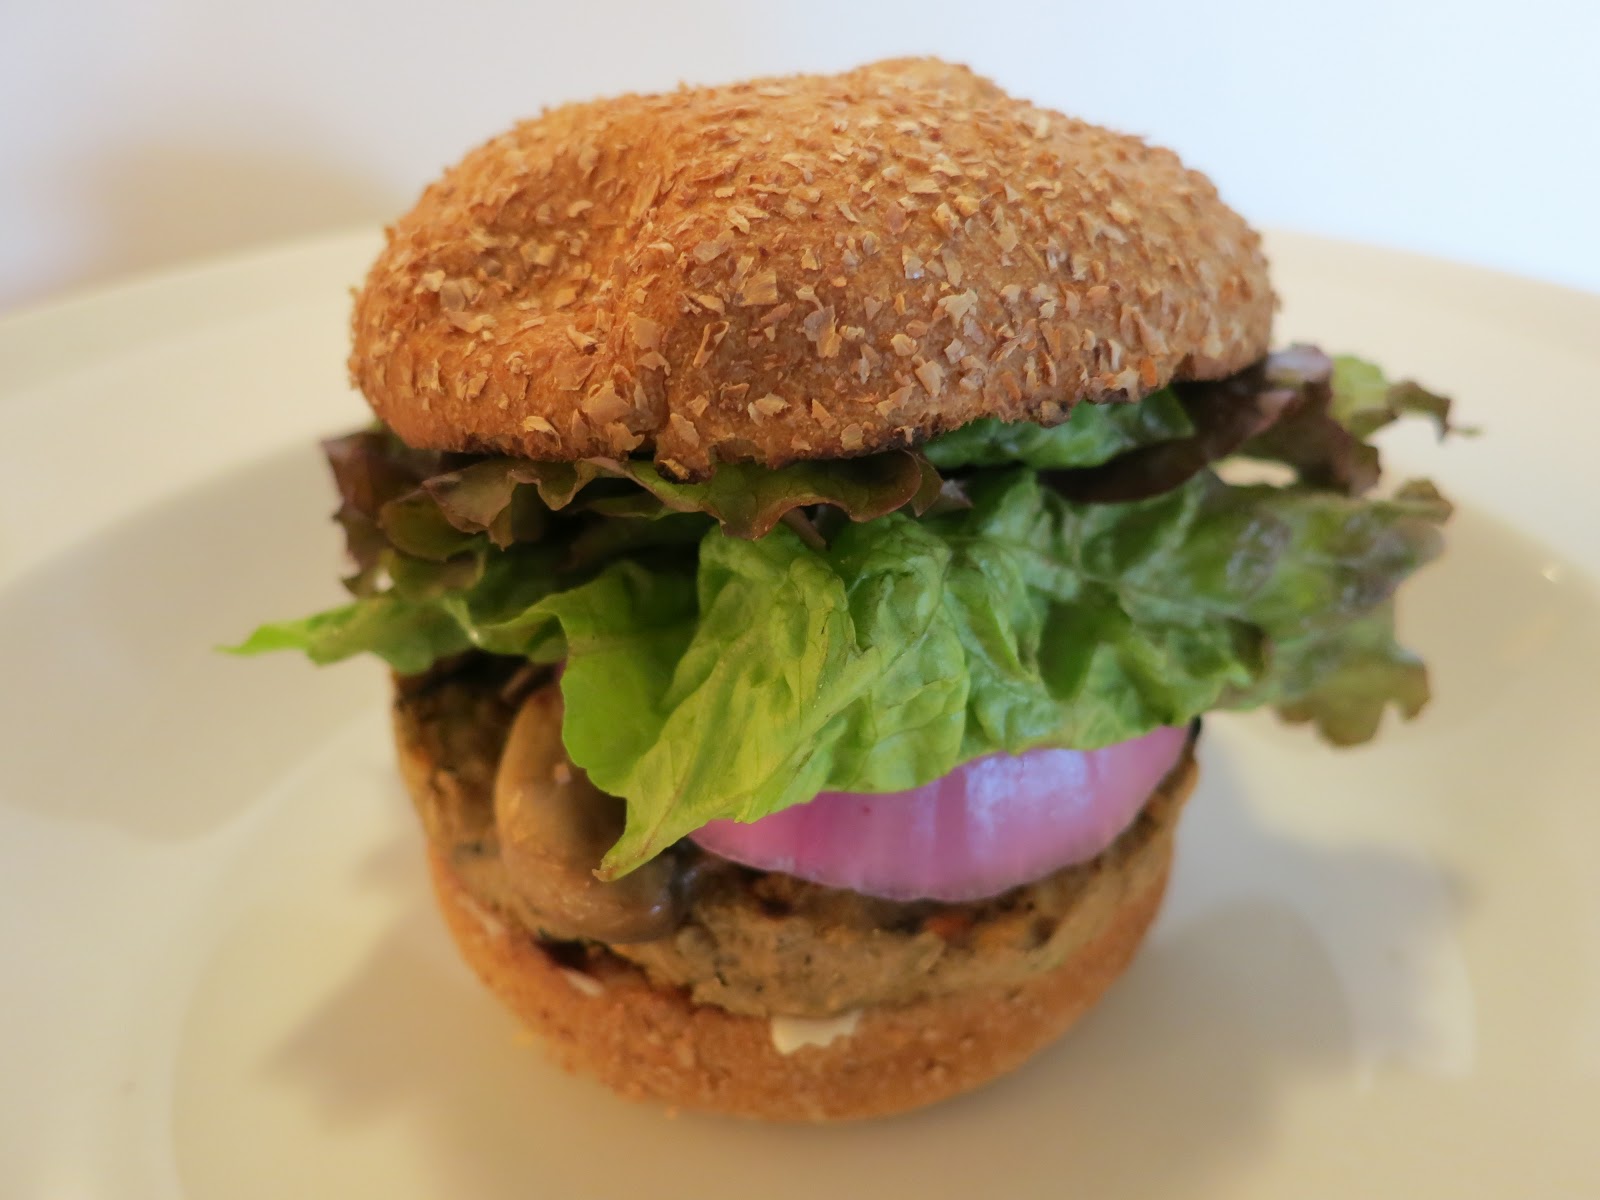 The Veracious Vegan SoL Cuisine Mushroom Rice Burgers